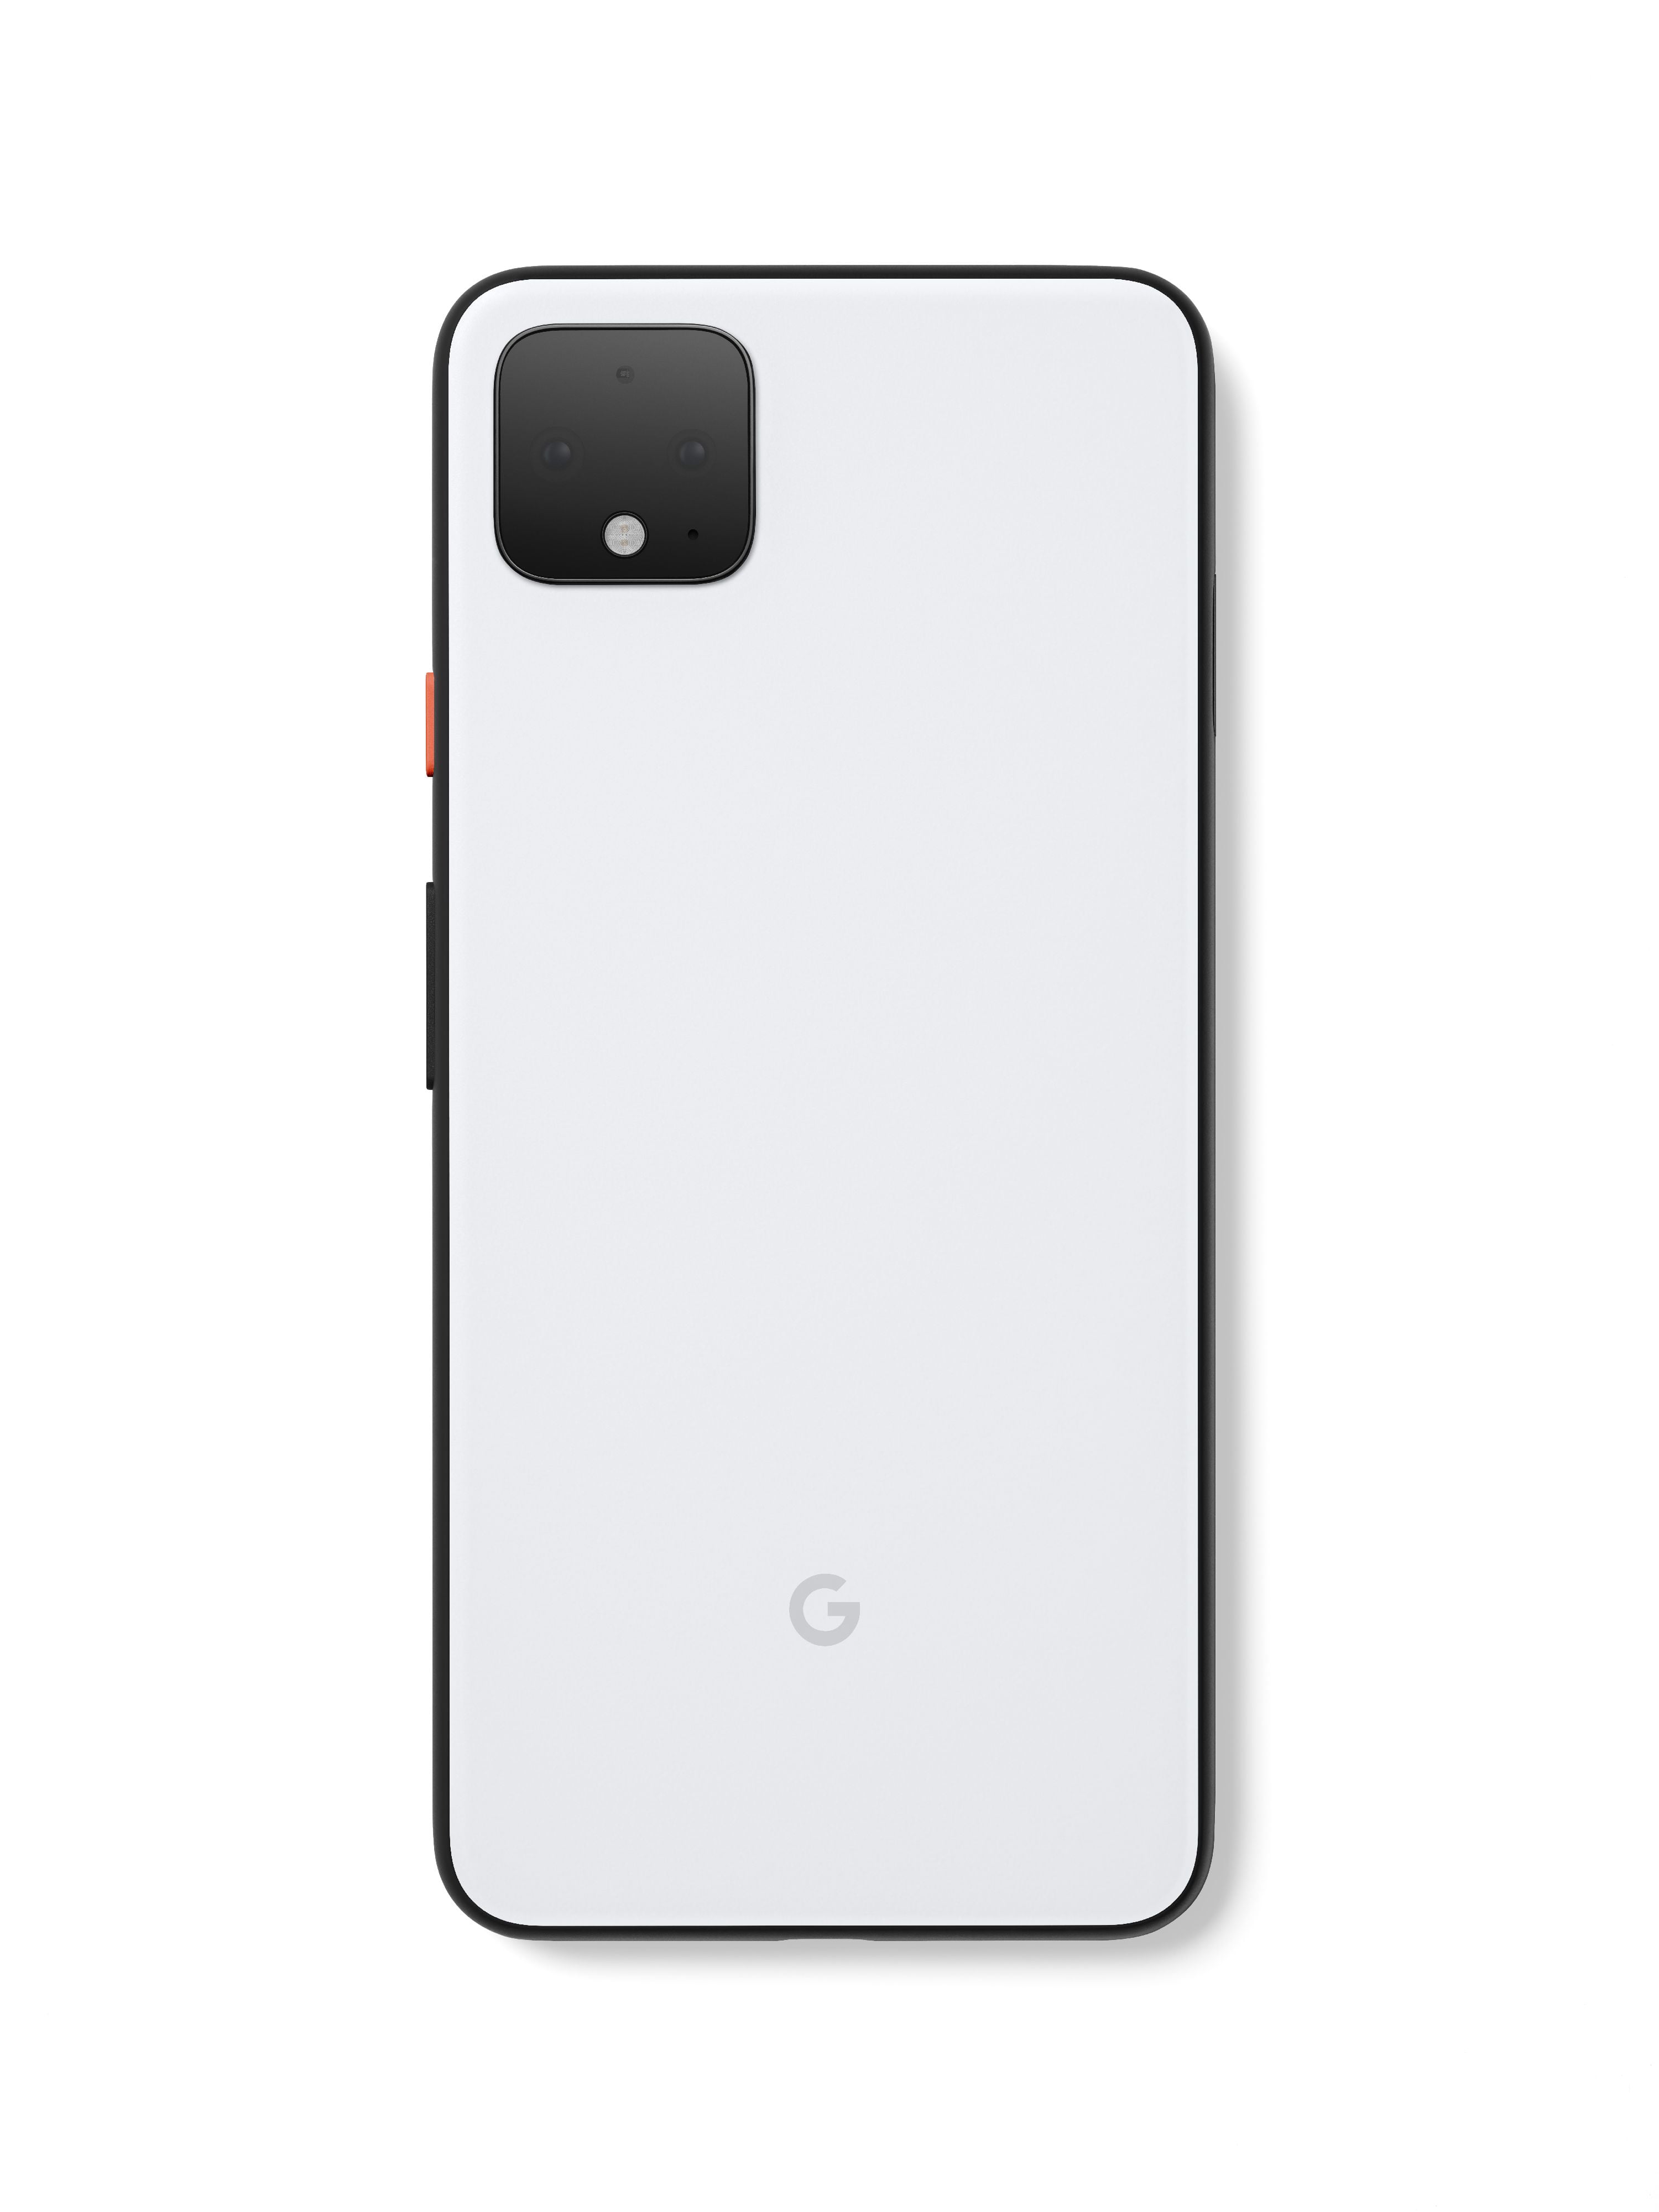 Google Pixel 4 XL White 64 GB, Unlocked